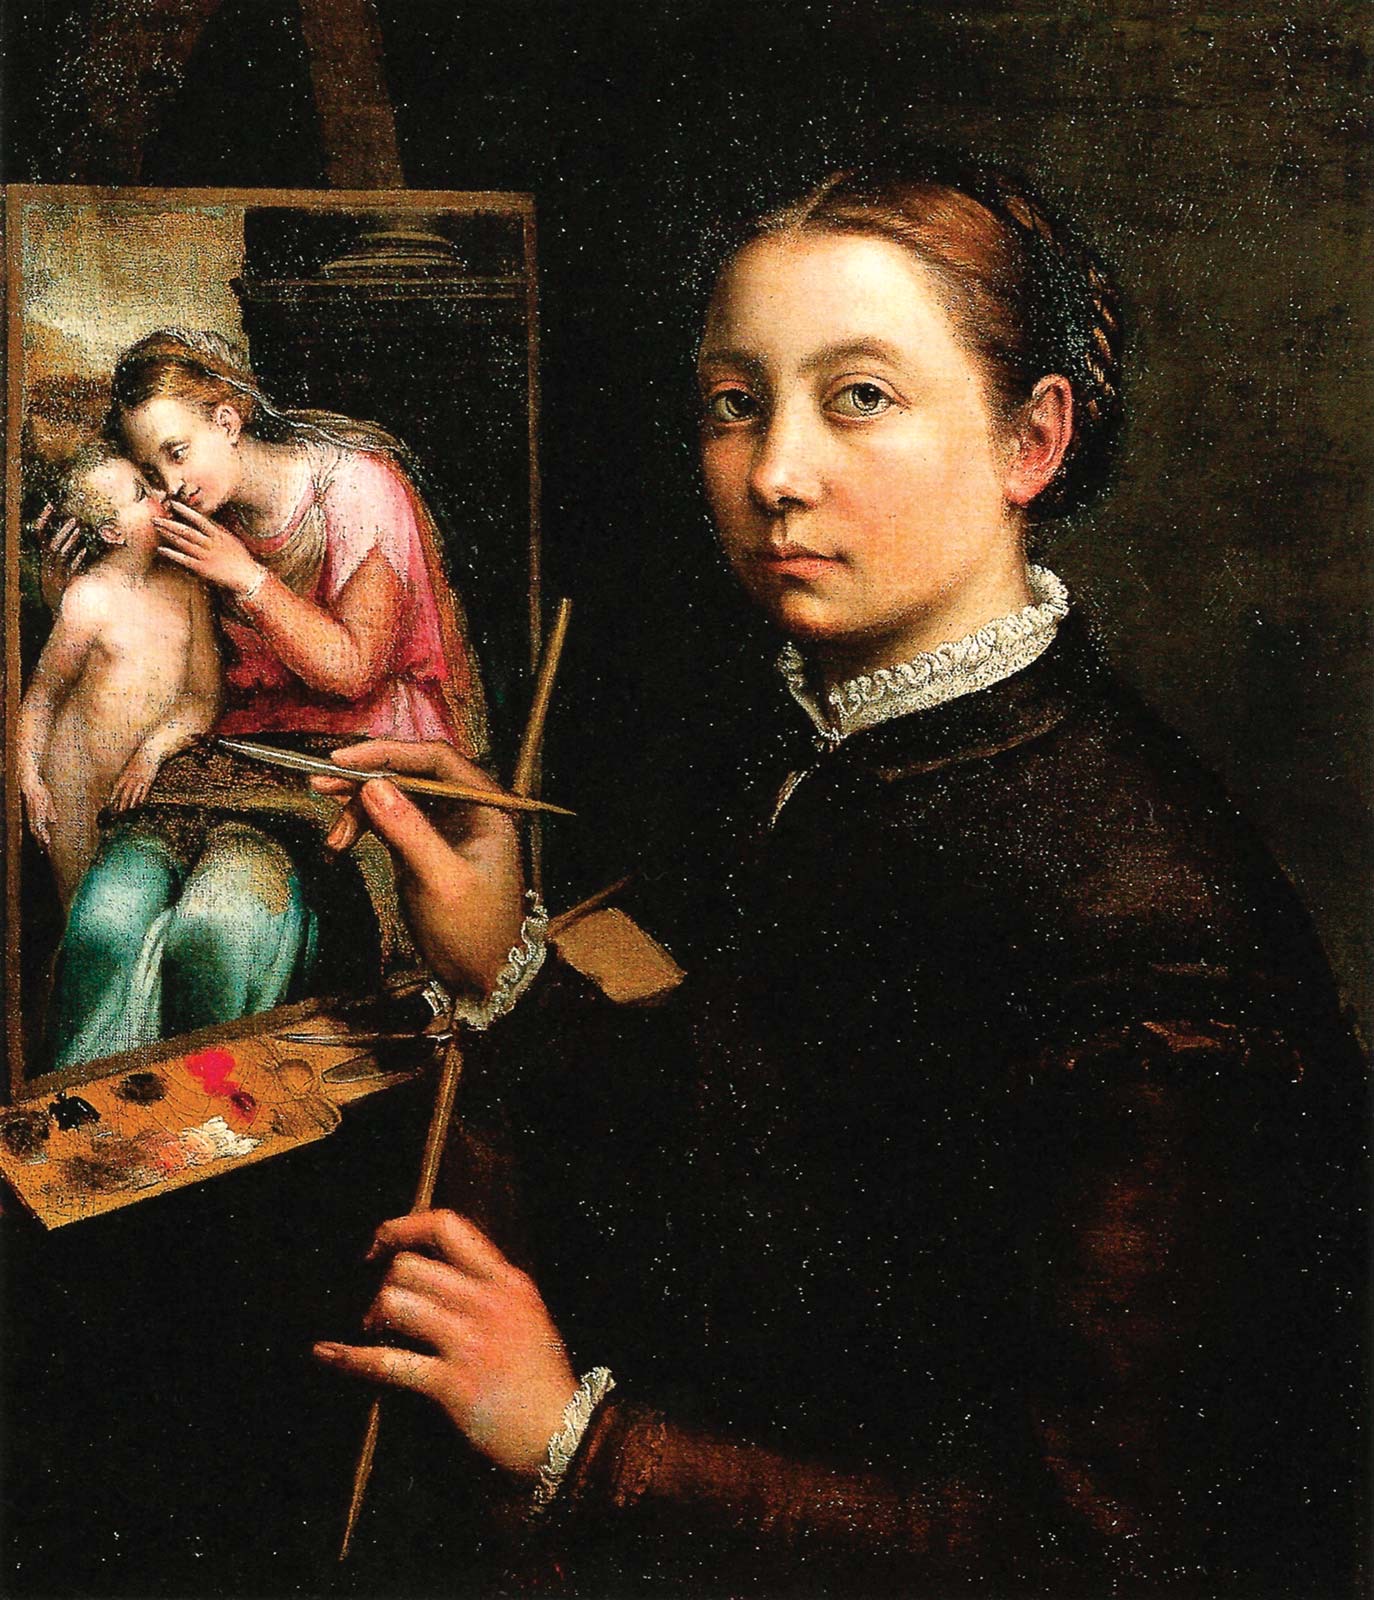 The original Self Portrait by Sofonisba Anguissola